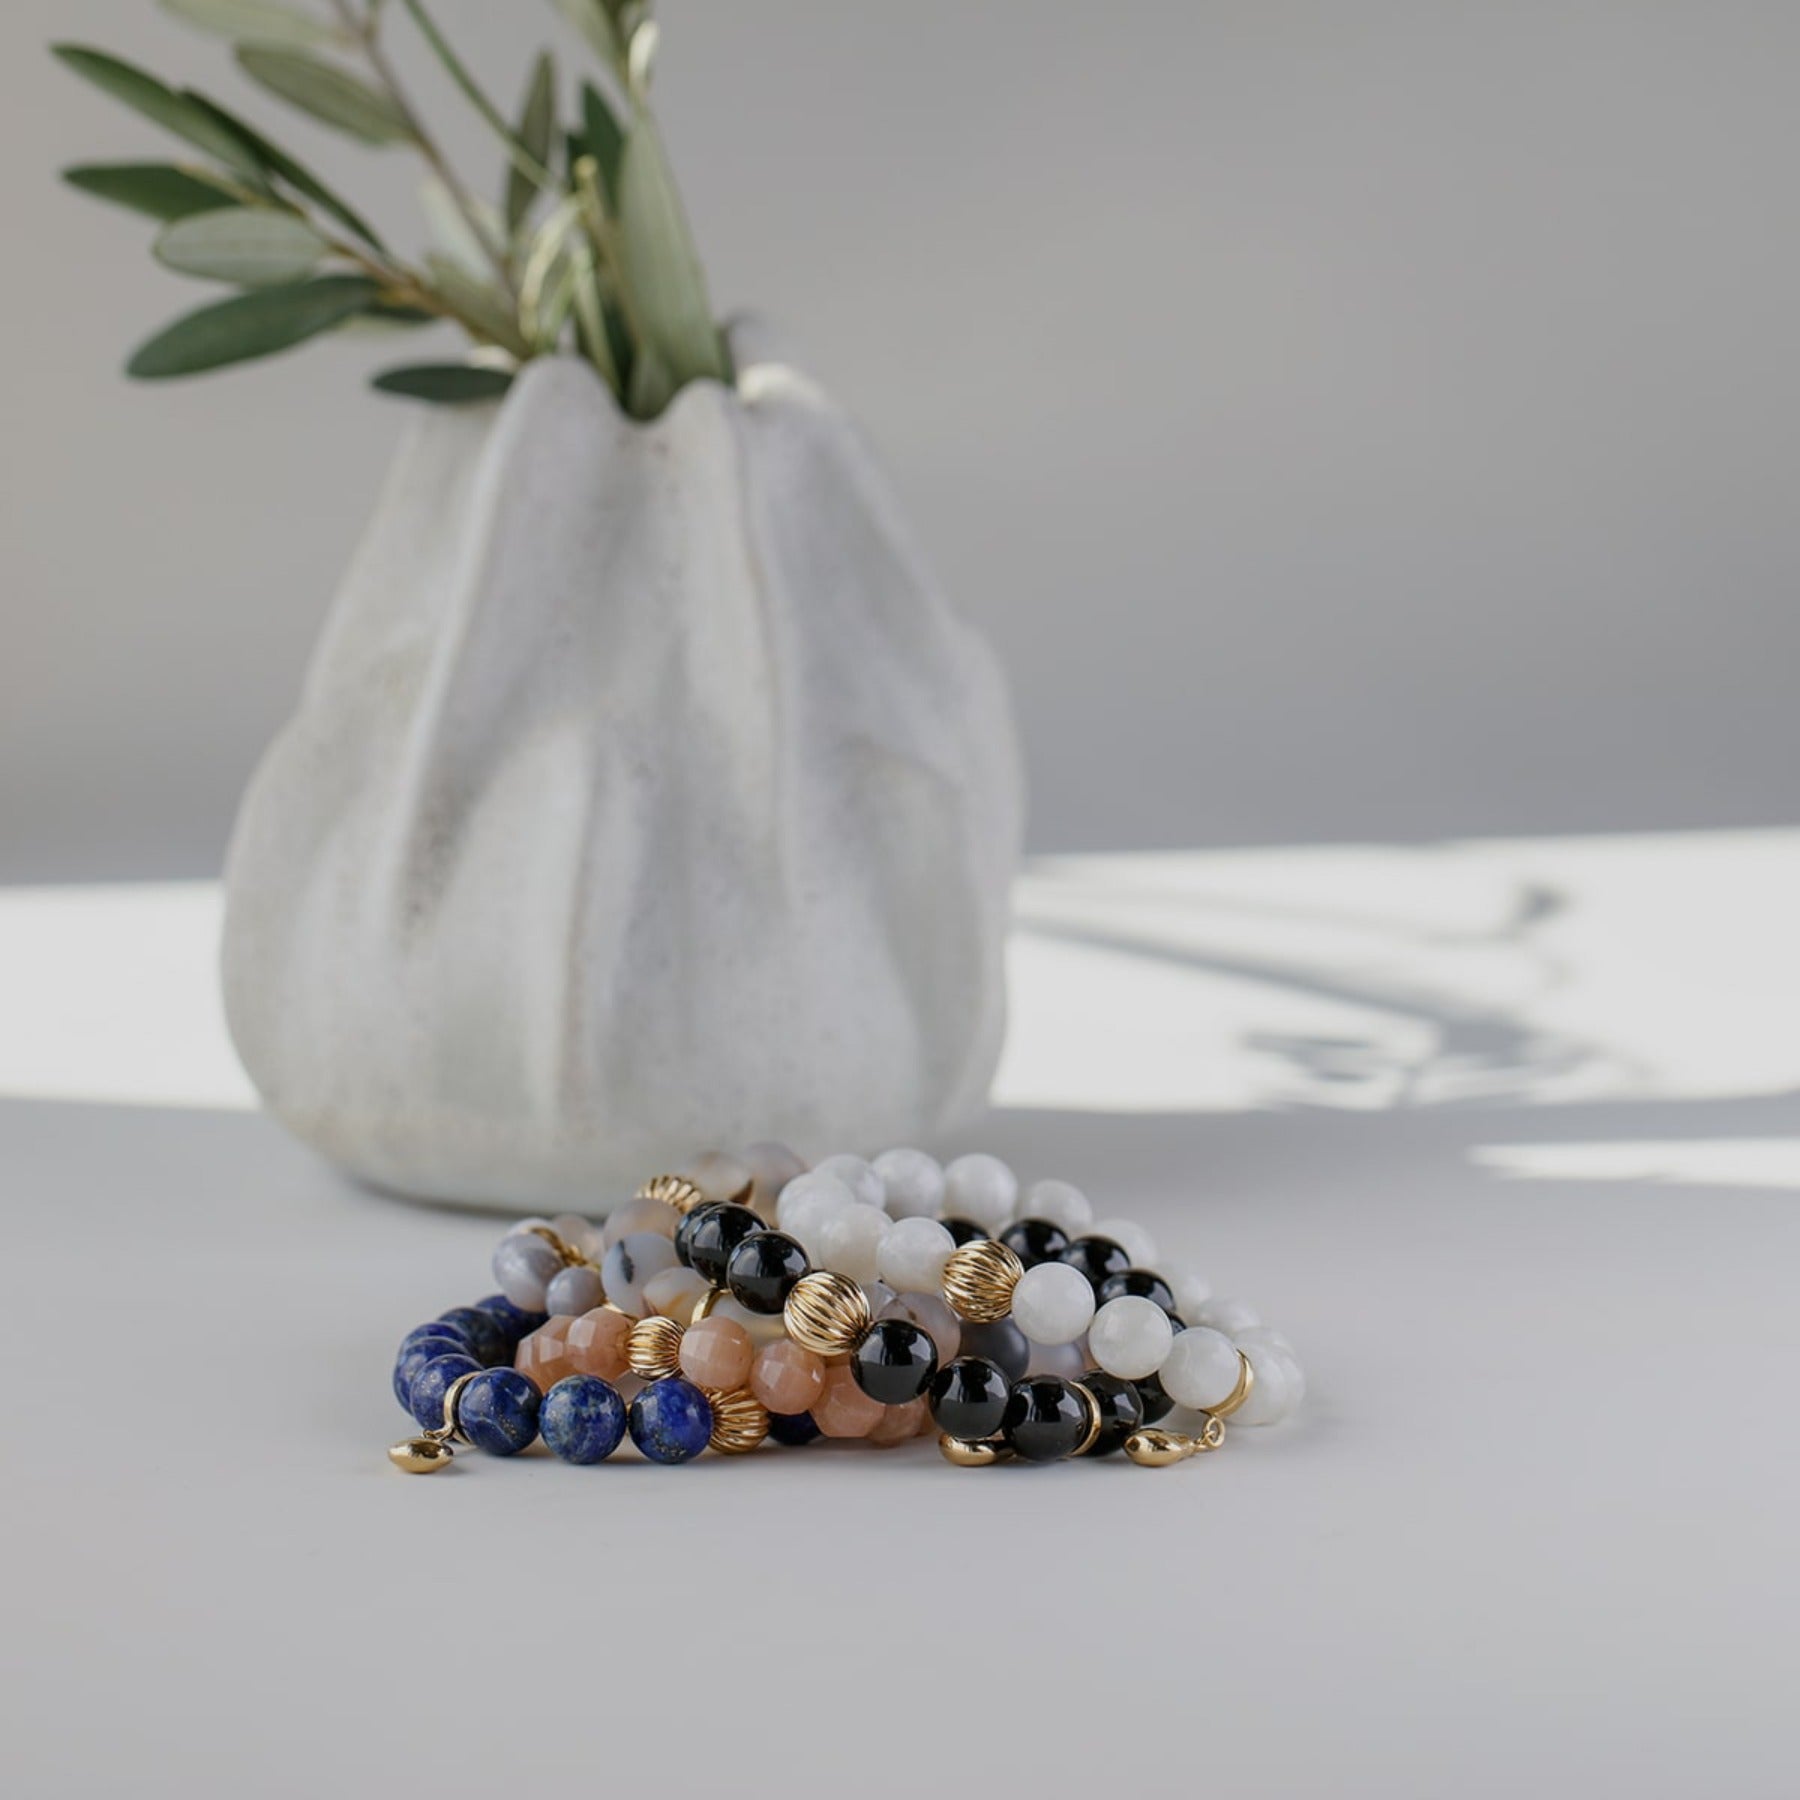 Black tourmaline crystal smooth gemstone elastic bracelet with 14k gold corrugated bead and pear charm.